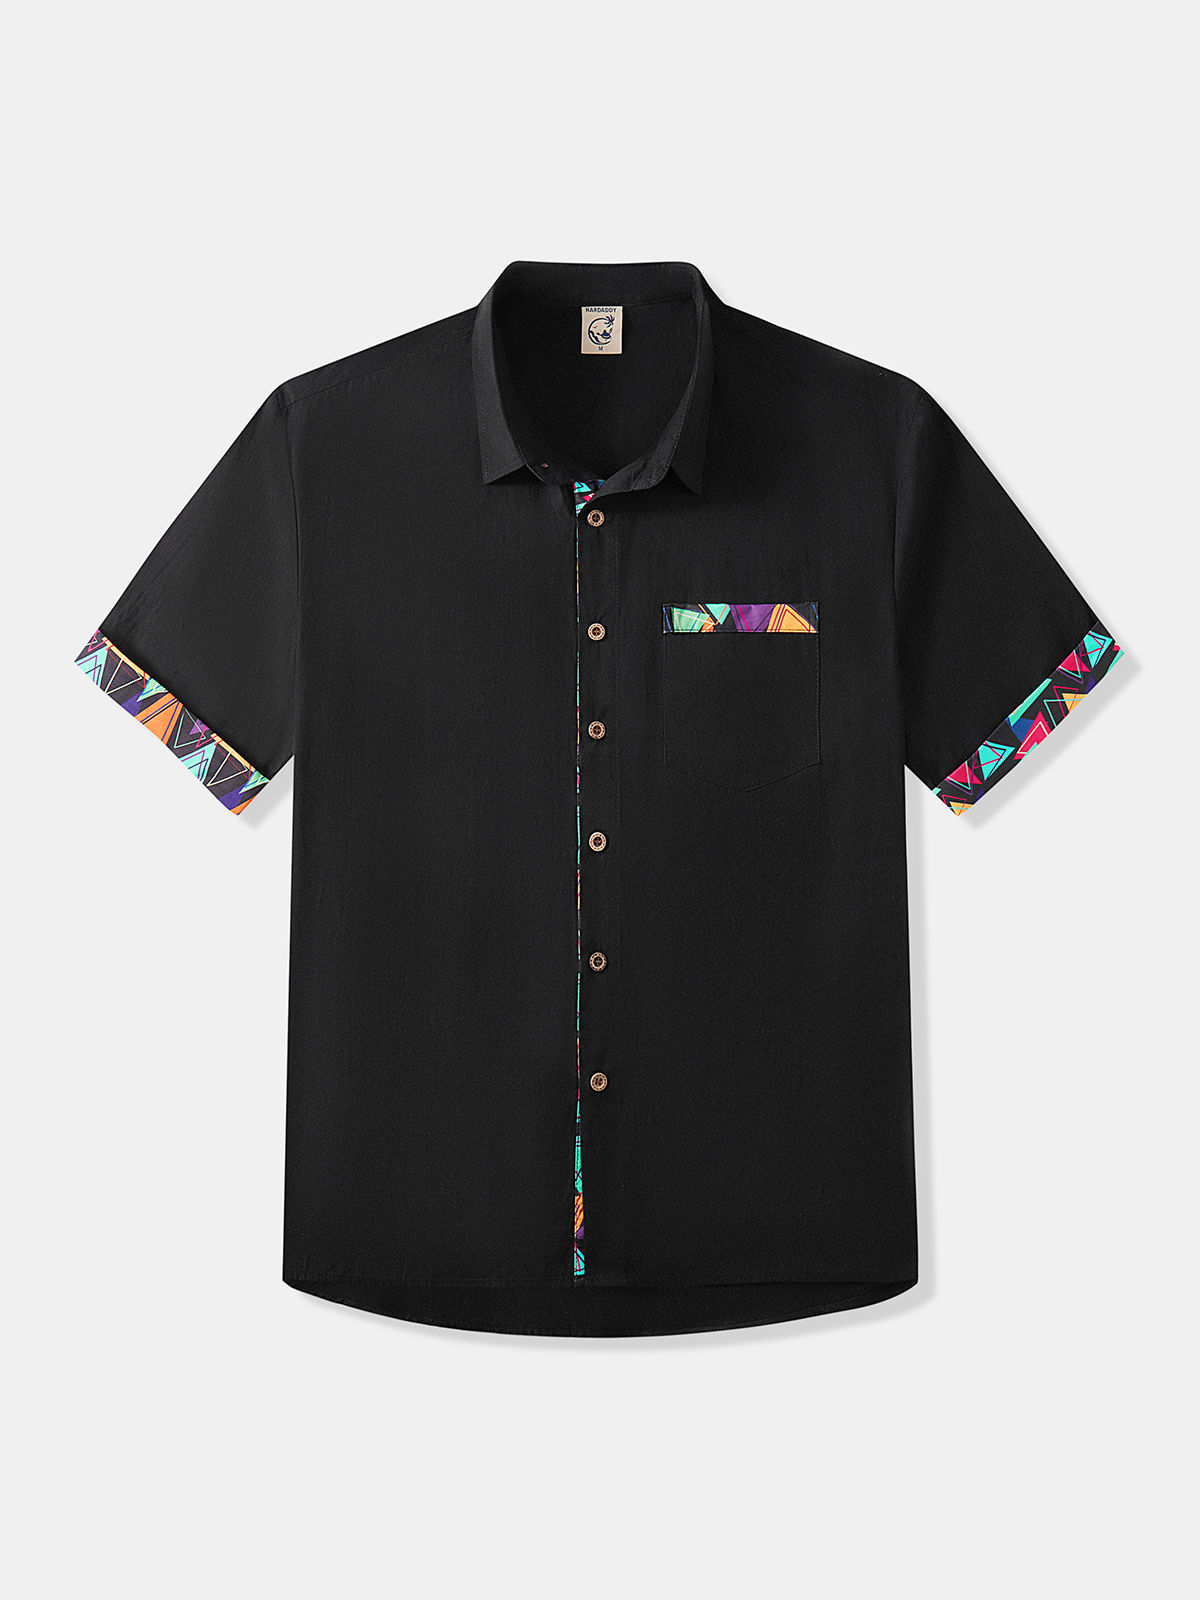 Hardaddy 100% Cotton Black Patchwork Short Sleeve Resort Comfy Shirt Hawaiian Daily Shirt